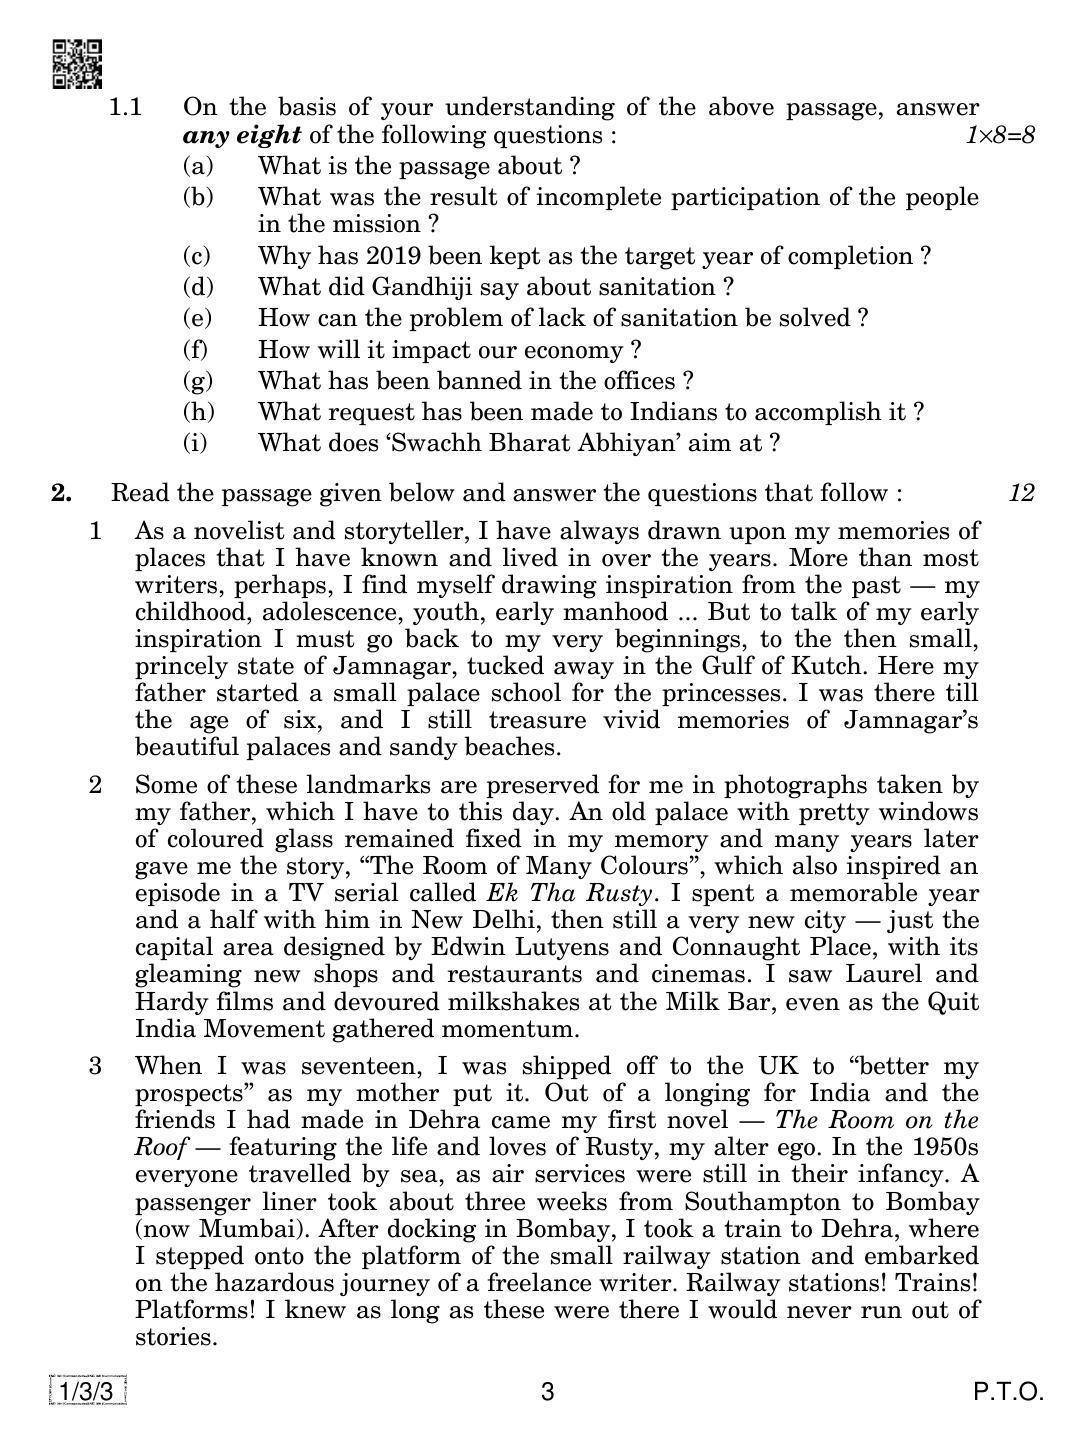 CBSE Class 10 1-3-3 ENGLISH COMMUNICATIVE 2019 Question Paper - Page 3